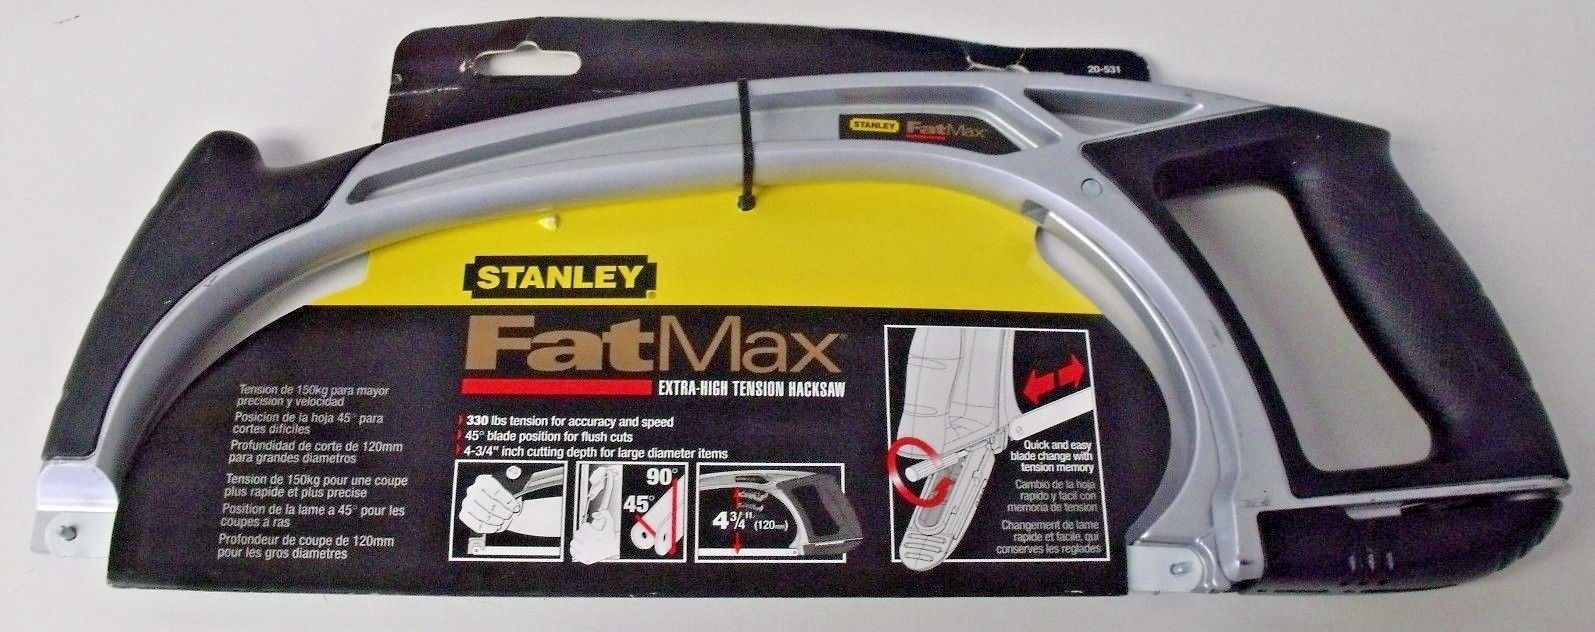 Stanley 20-531 12" 24 TPI FatMax High Tension Bi-Metal Hacksaw